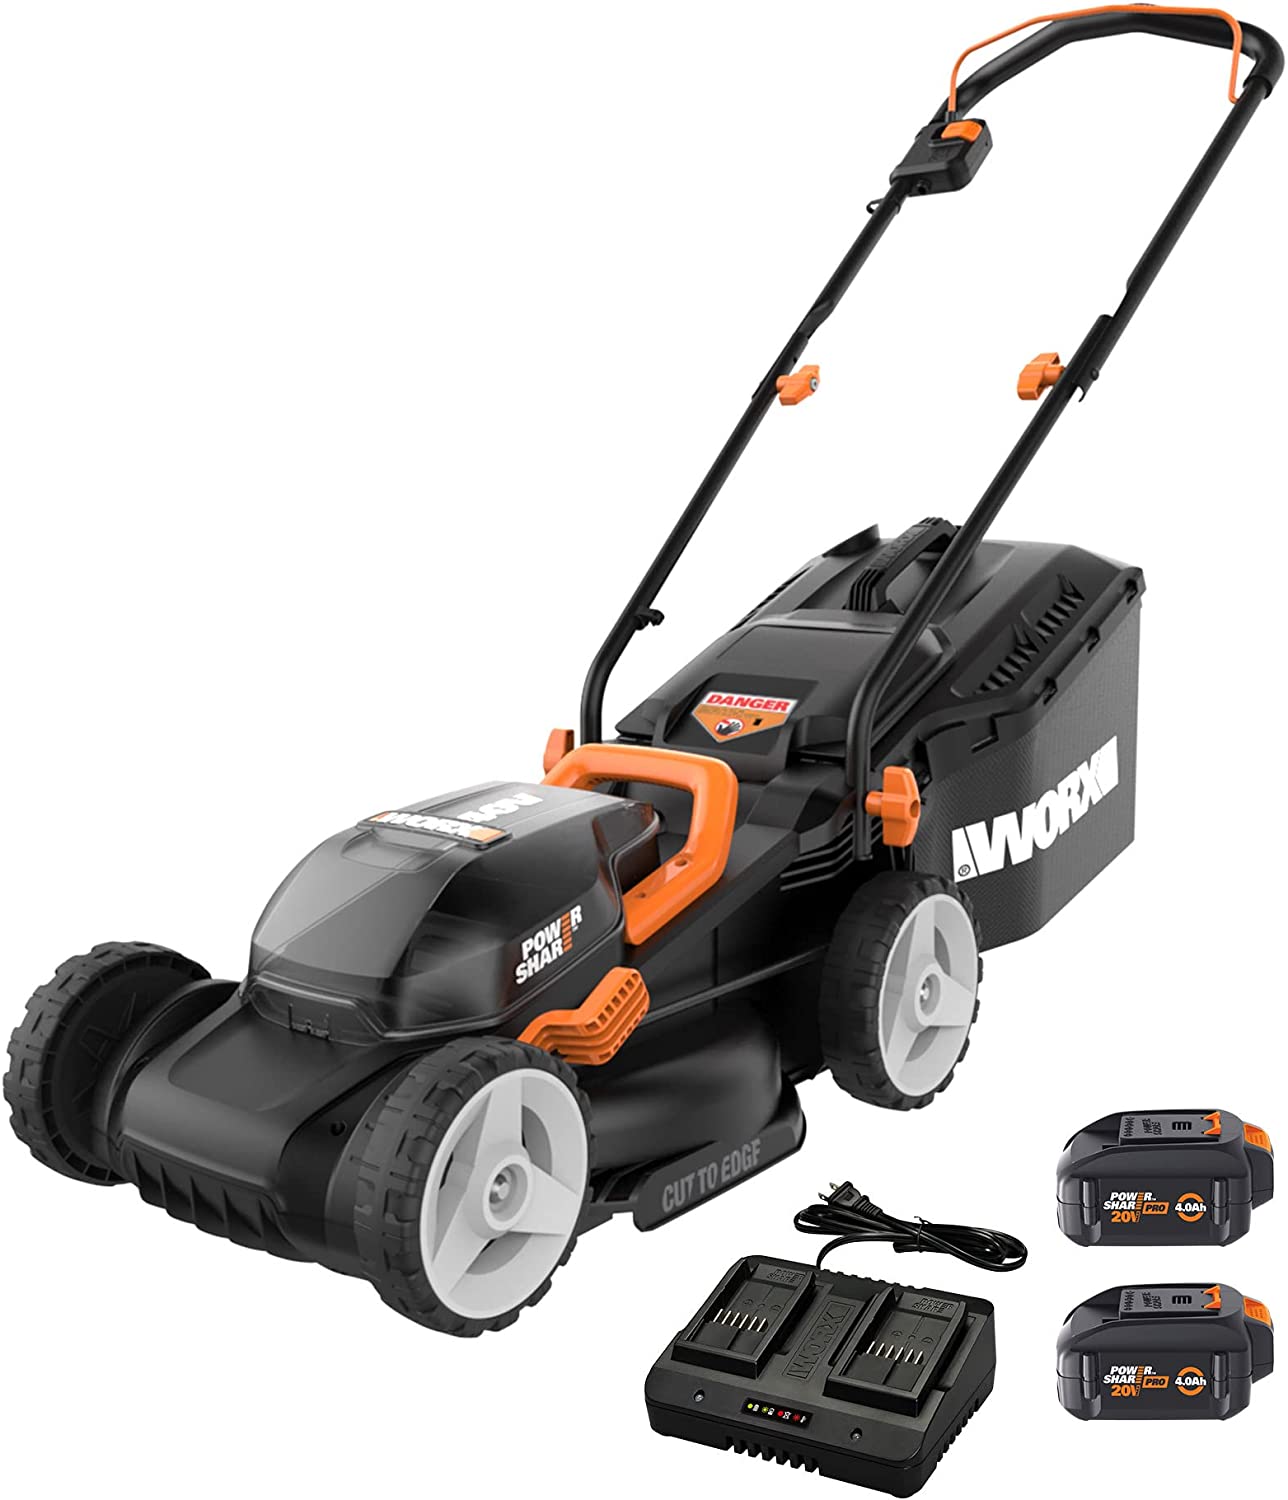 Worx Intellicut Dual Port Self-Propelled Lawn Mower, 14-Inch